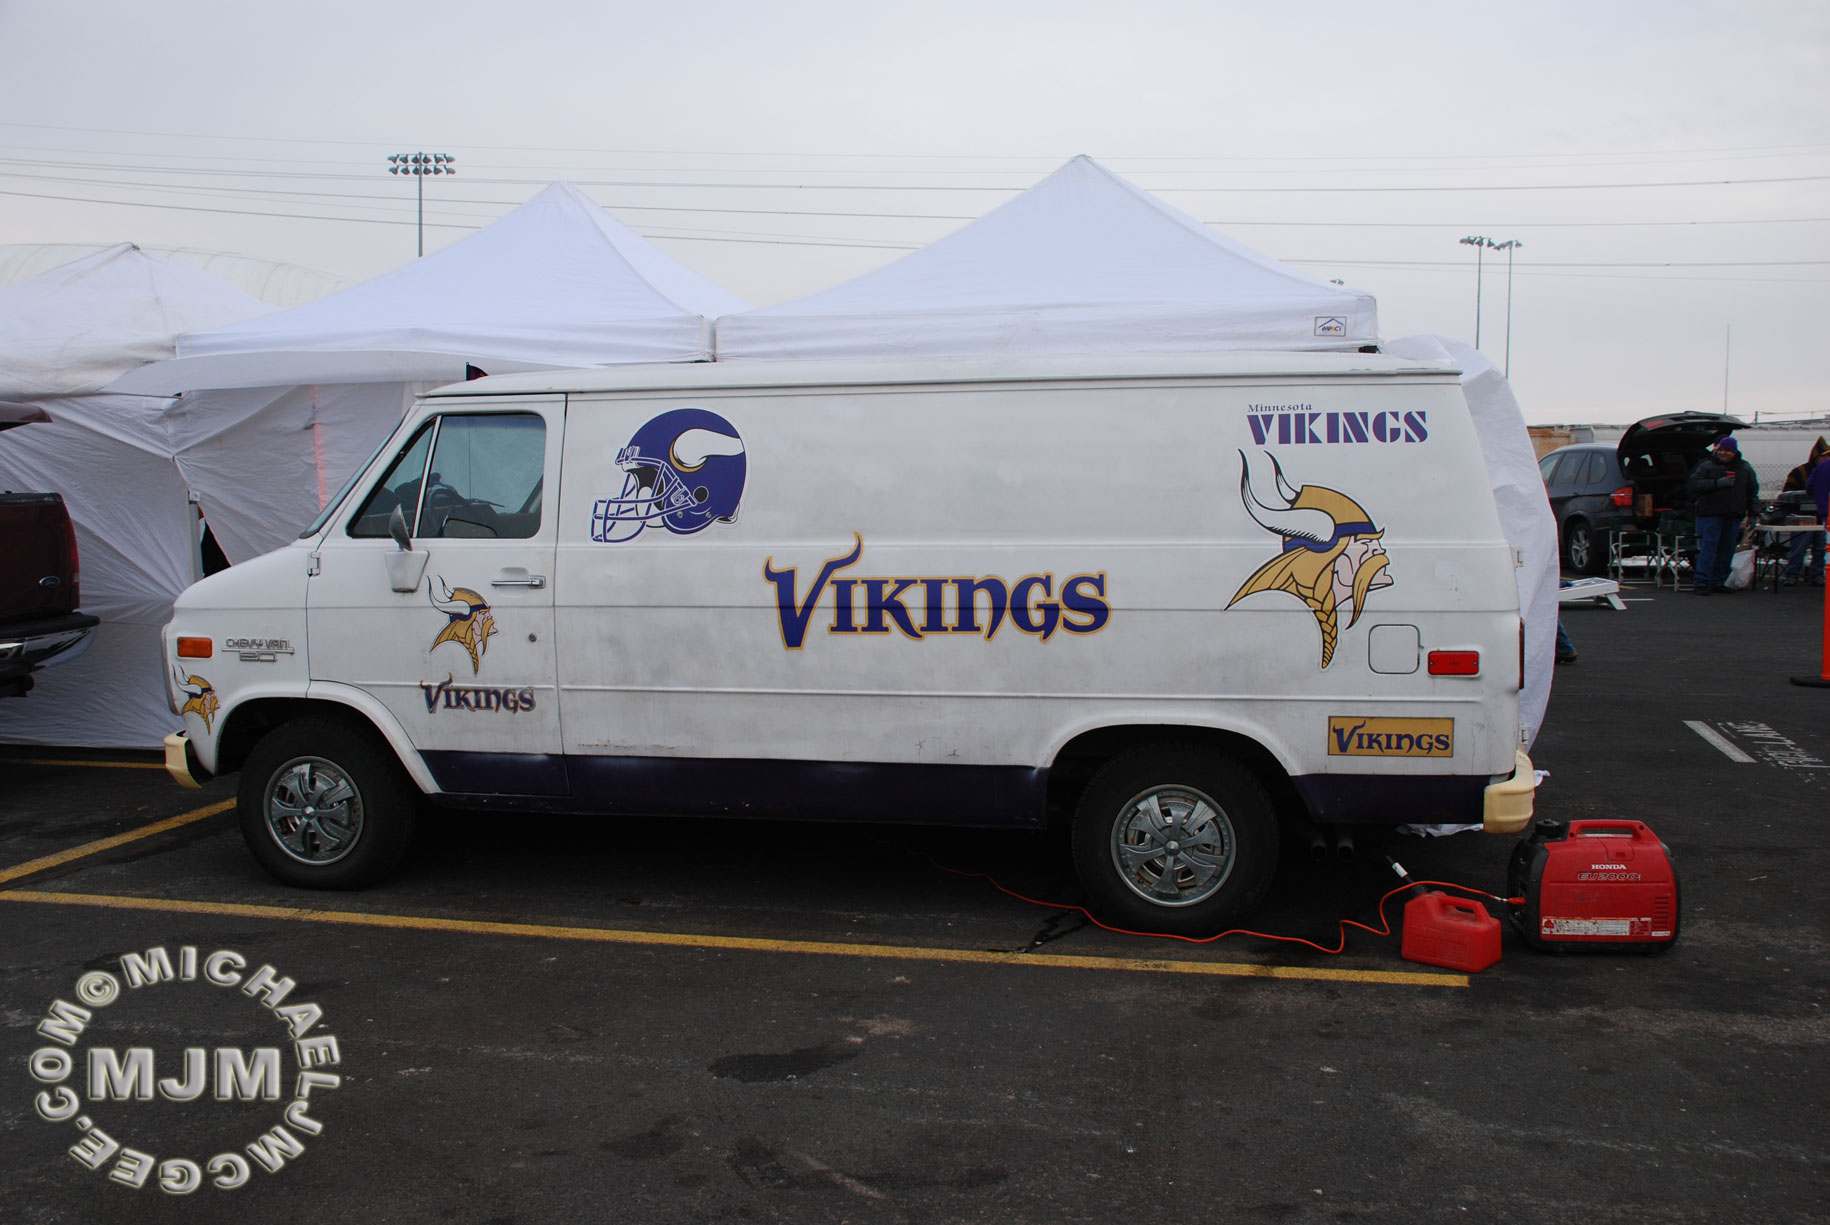 Jets @ Vikings 12/7/2014 / michaeljmcgee.com